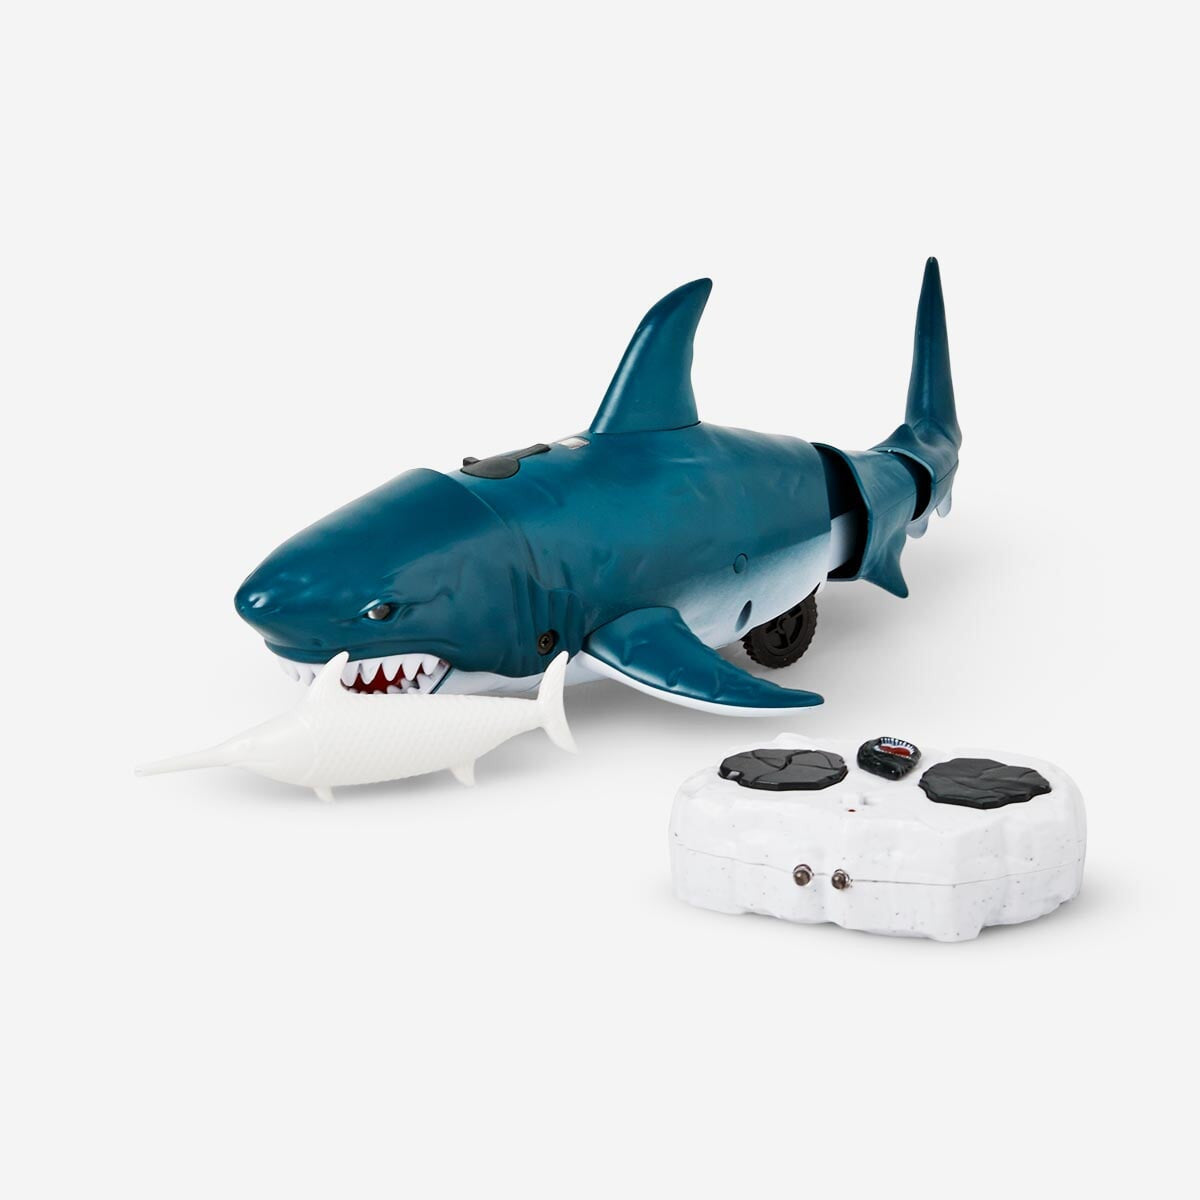 Remote-controlled shark Gadget Flying Tiger Copenhagen 